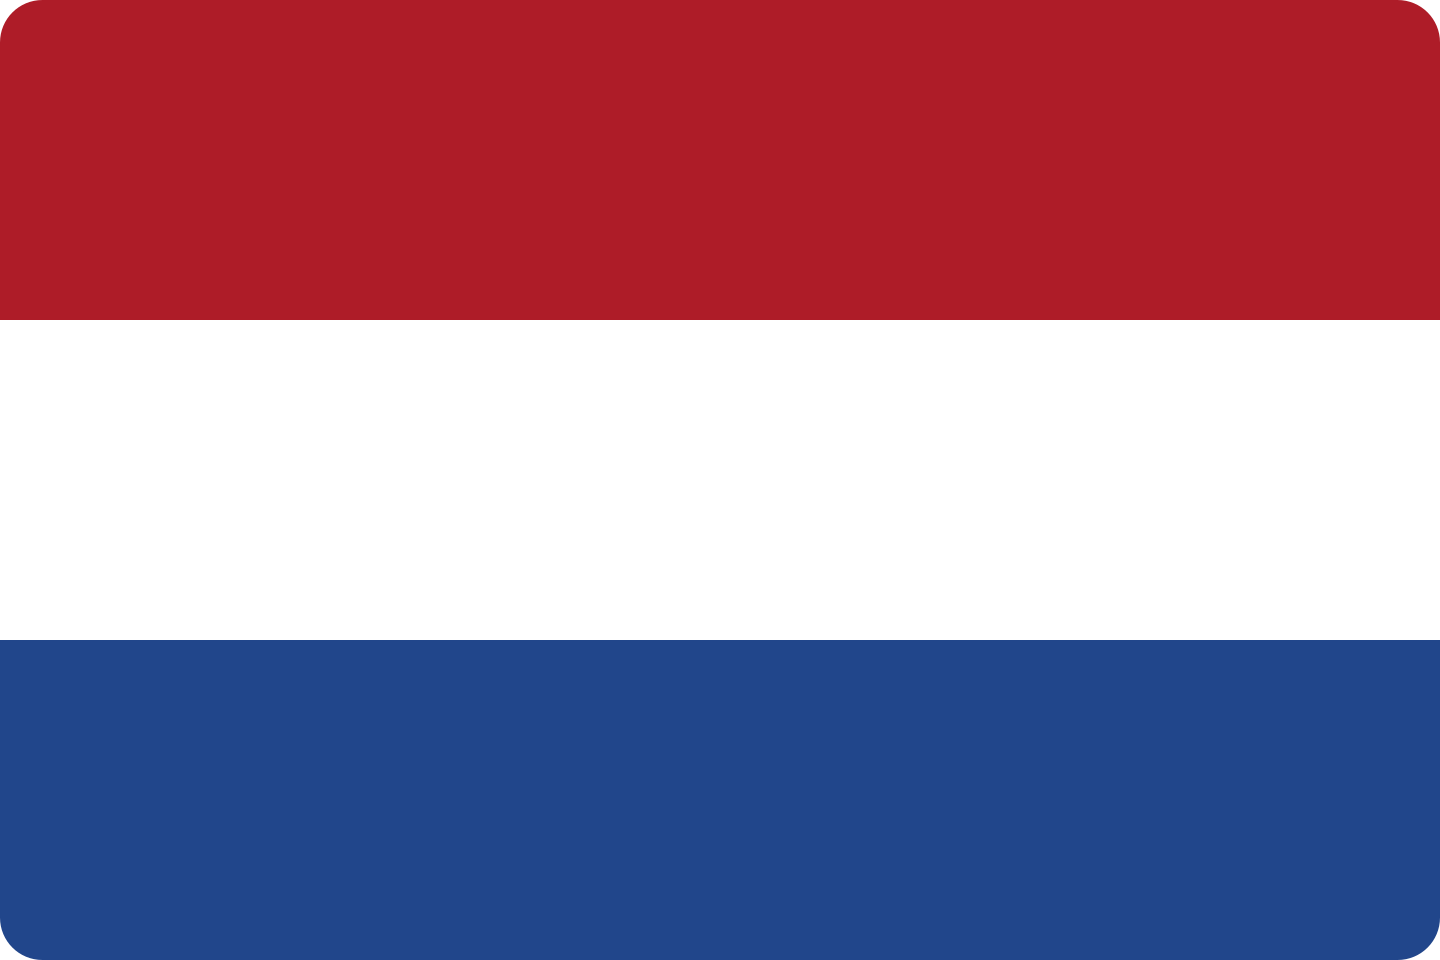 bandeira paises baixos netherlands flag 1 - Drapeau des Pays-Bas